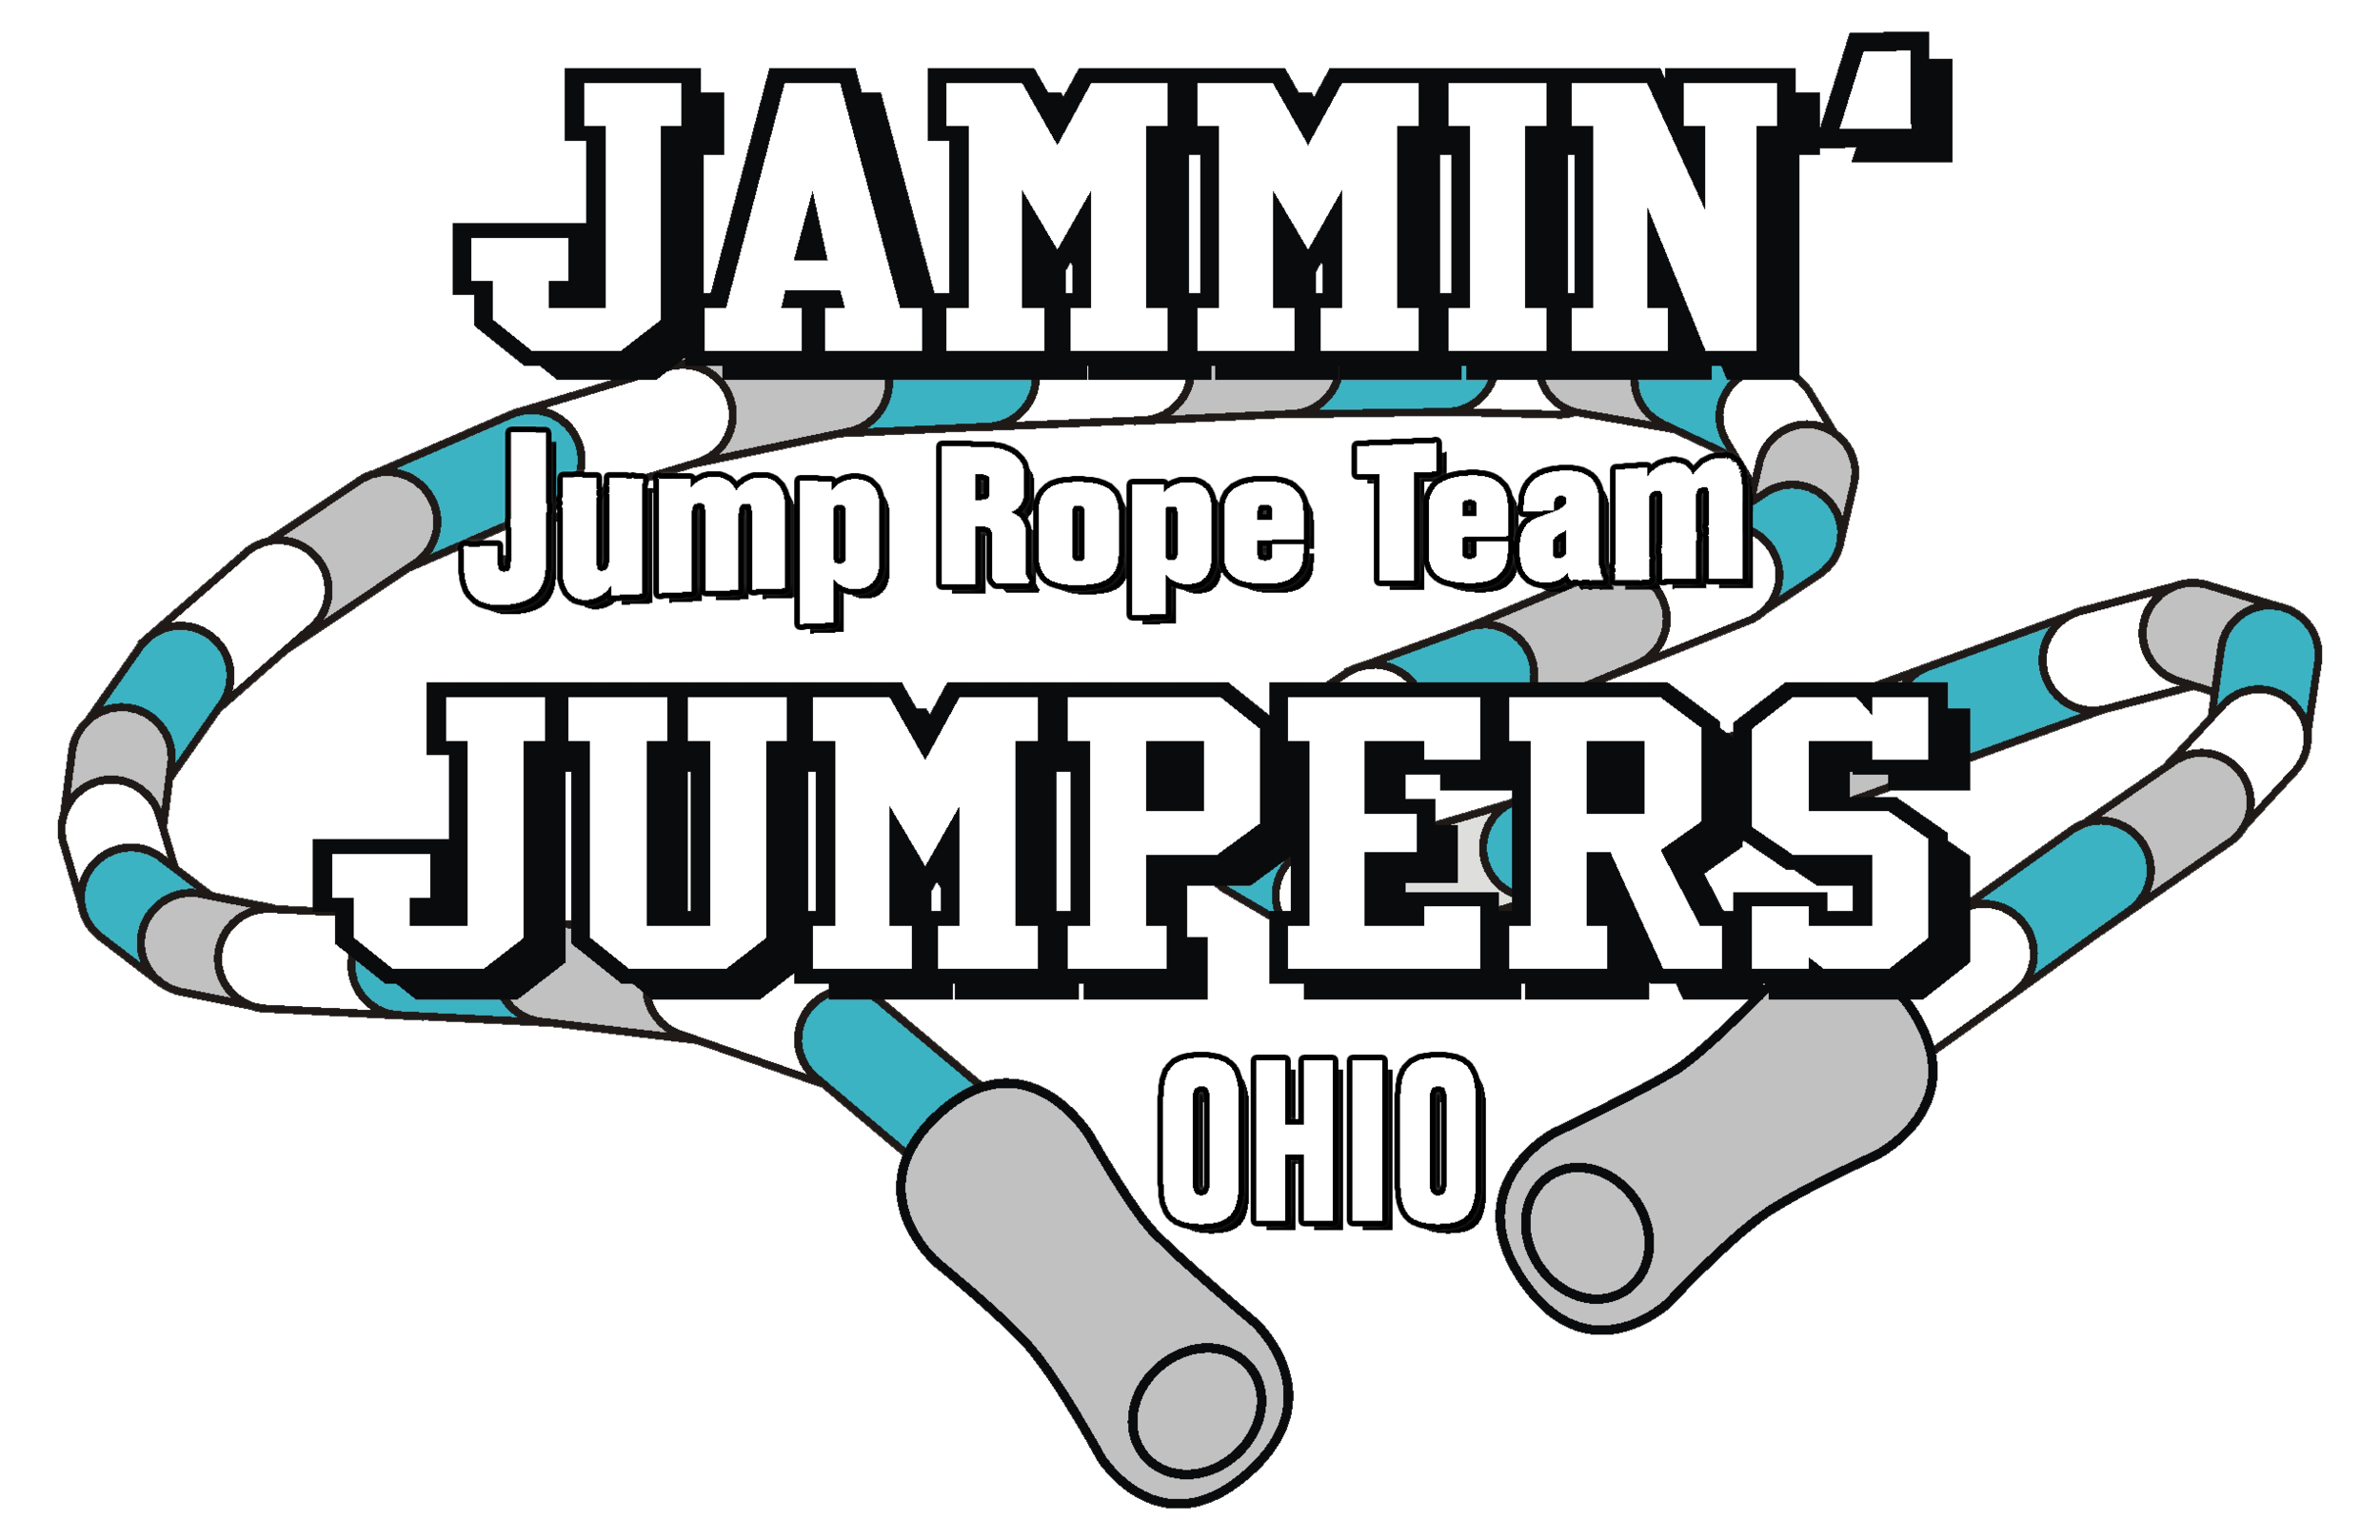 Jammin' Jumpers